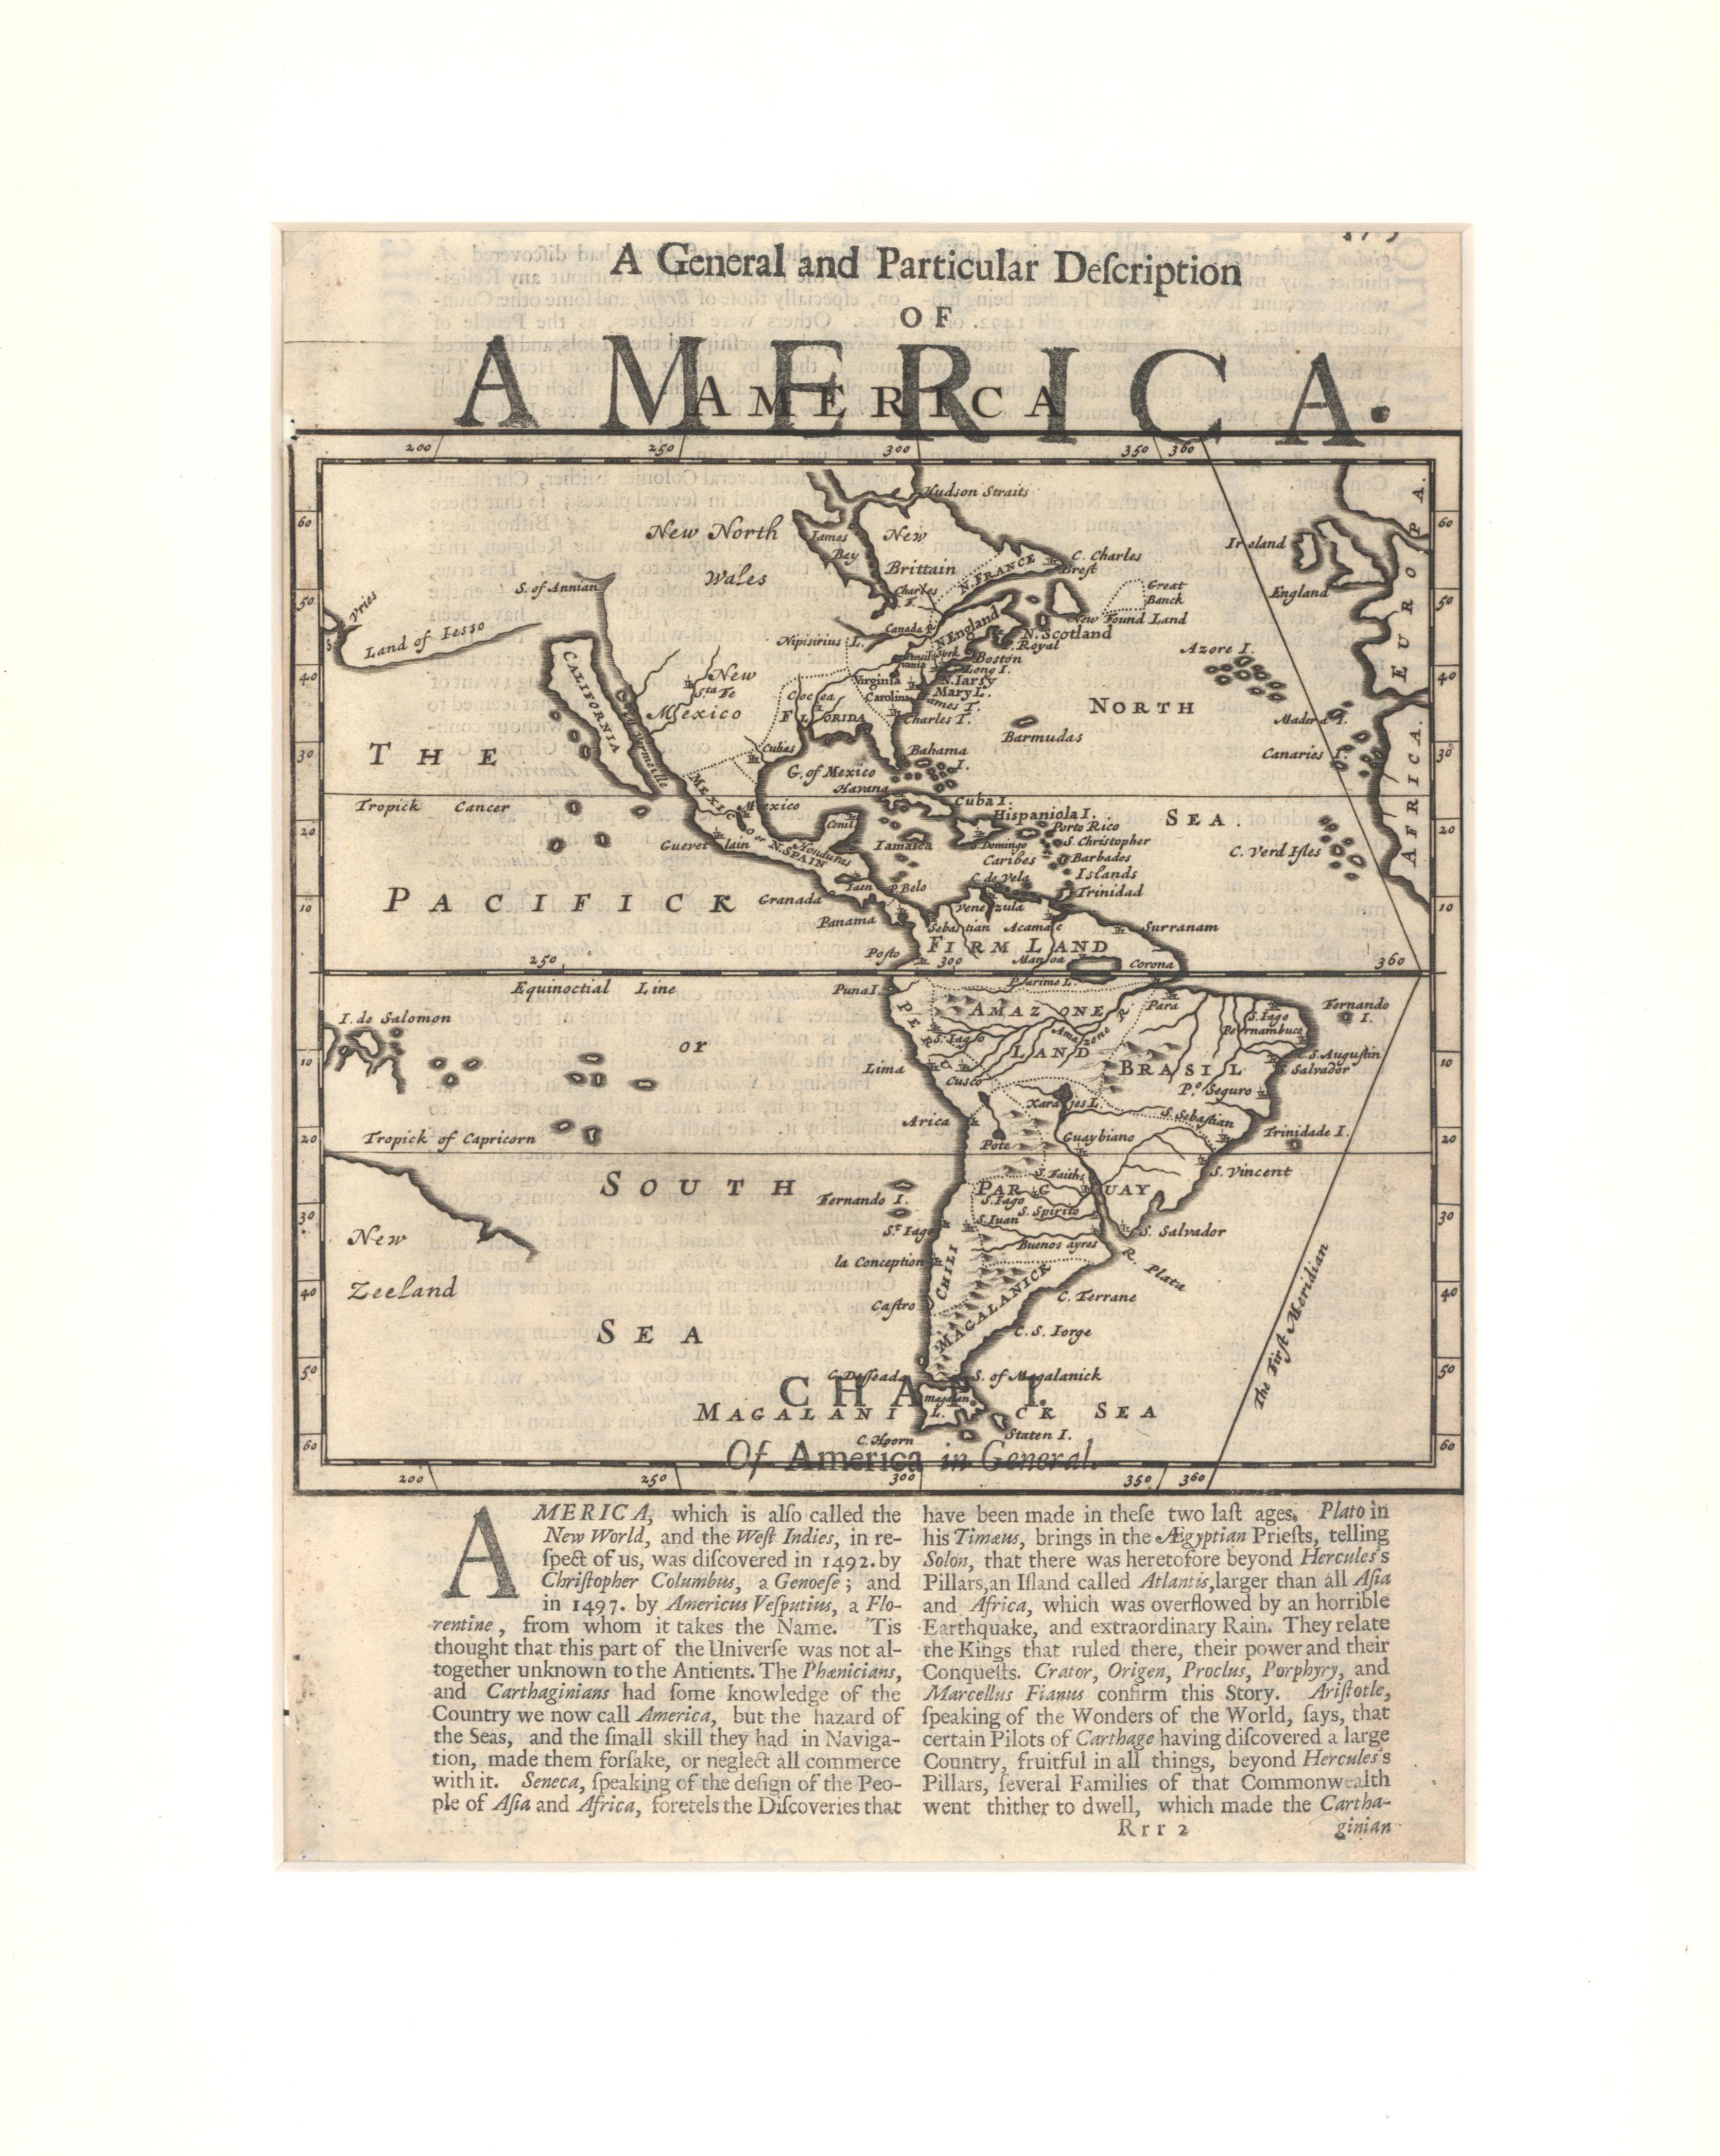 1701 Western Hemisphere Map with California as an Island